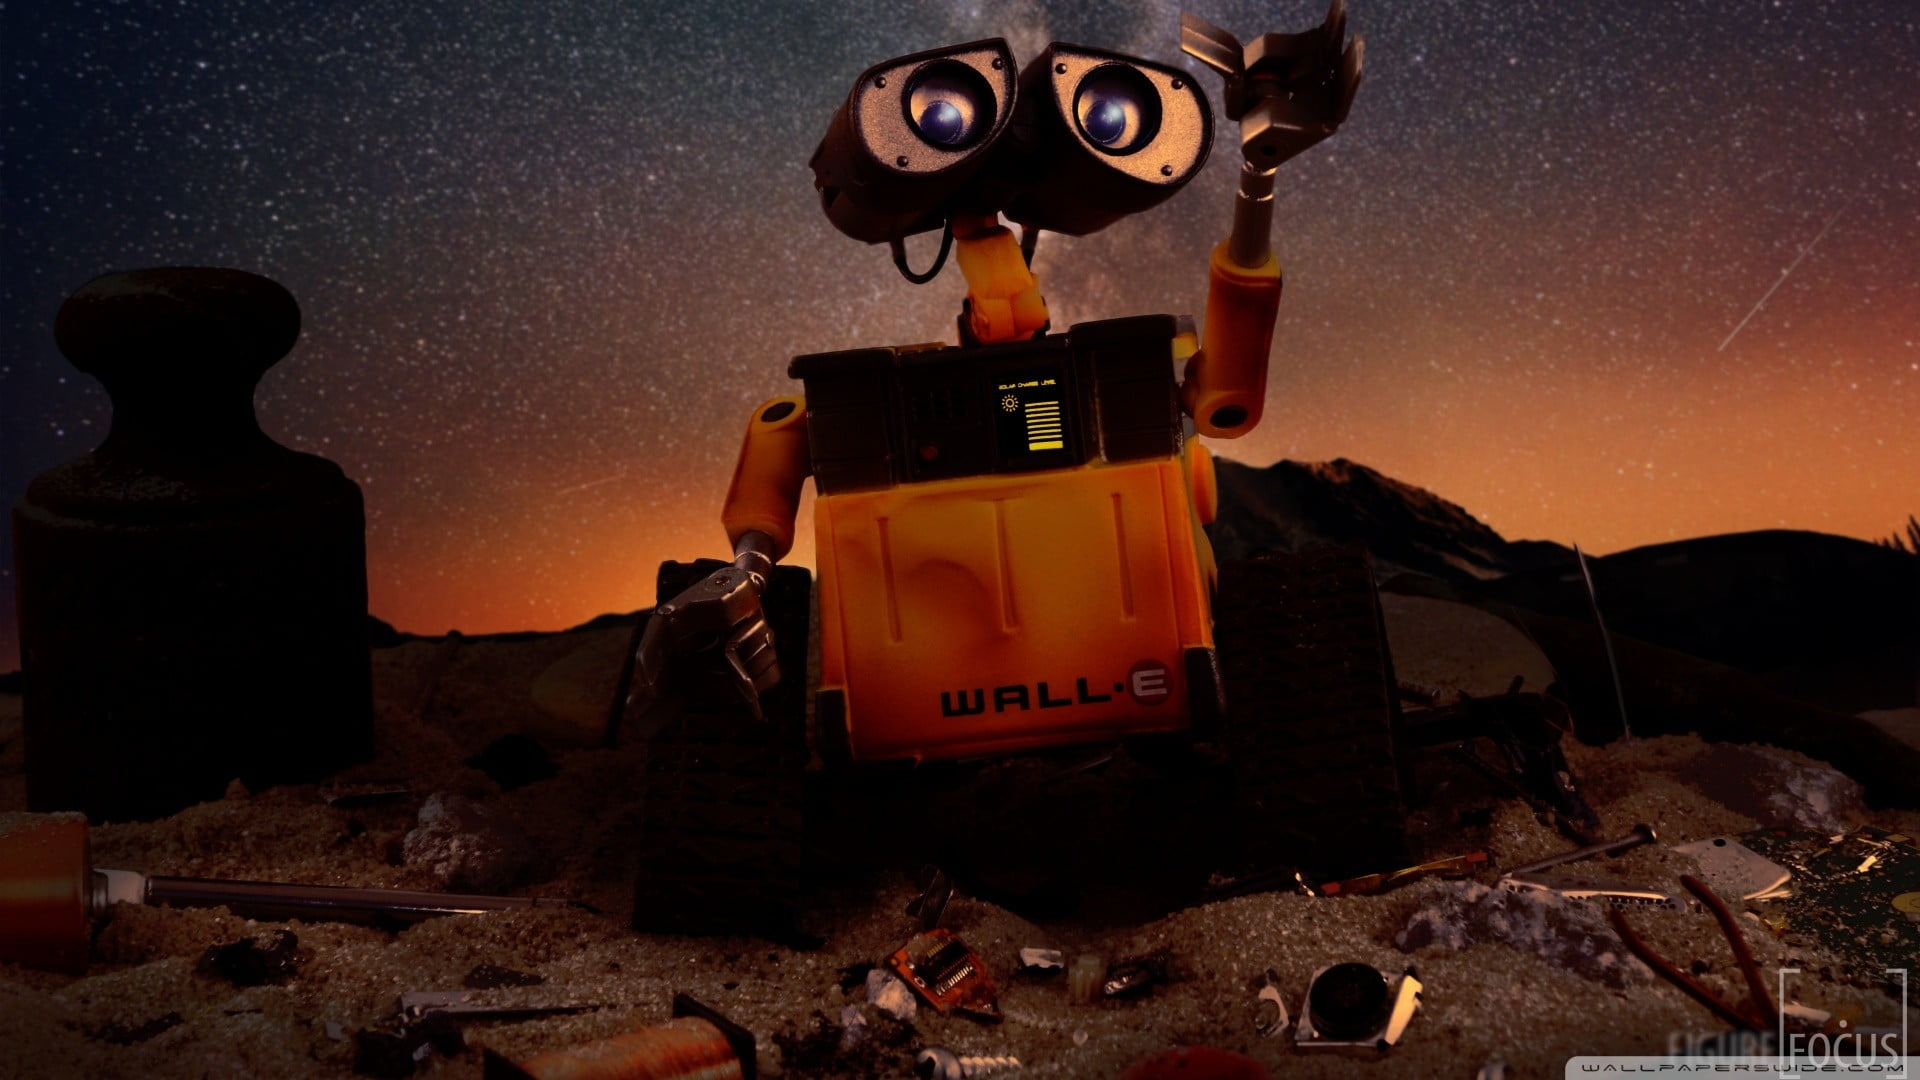 black and orange Wall-E robot illustration, sky, night, nature